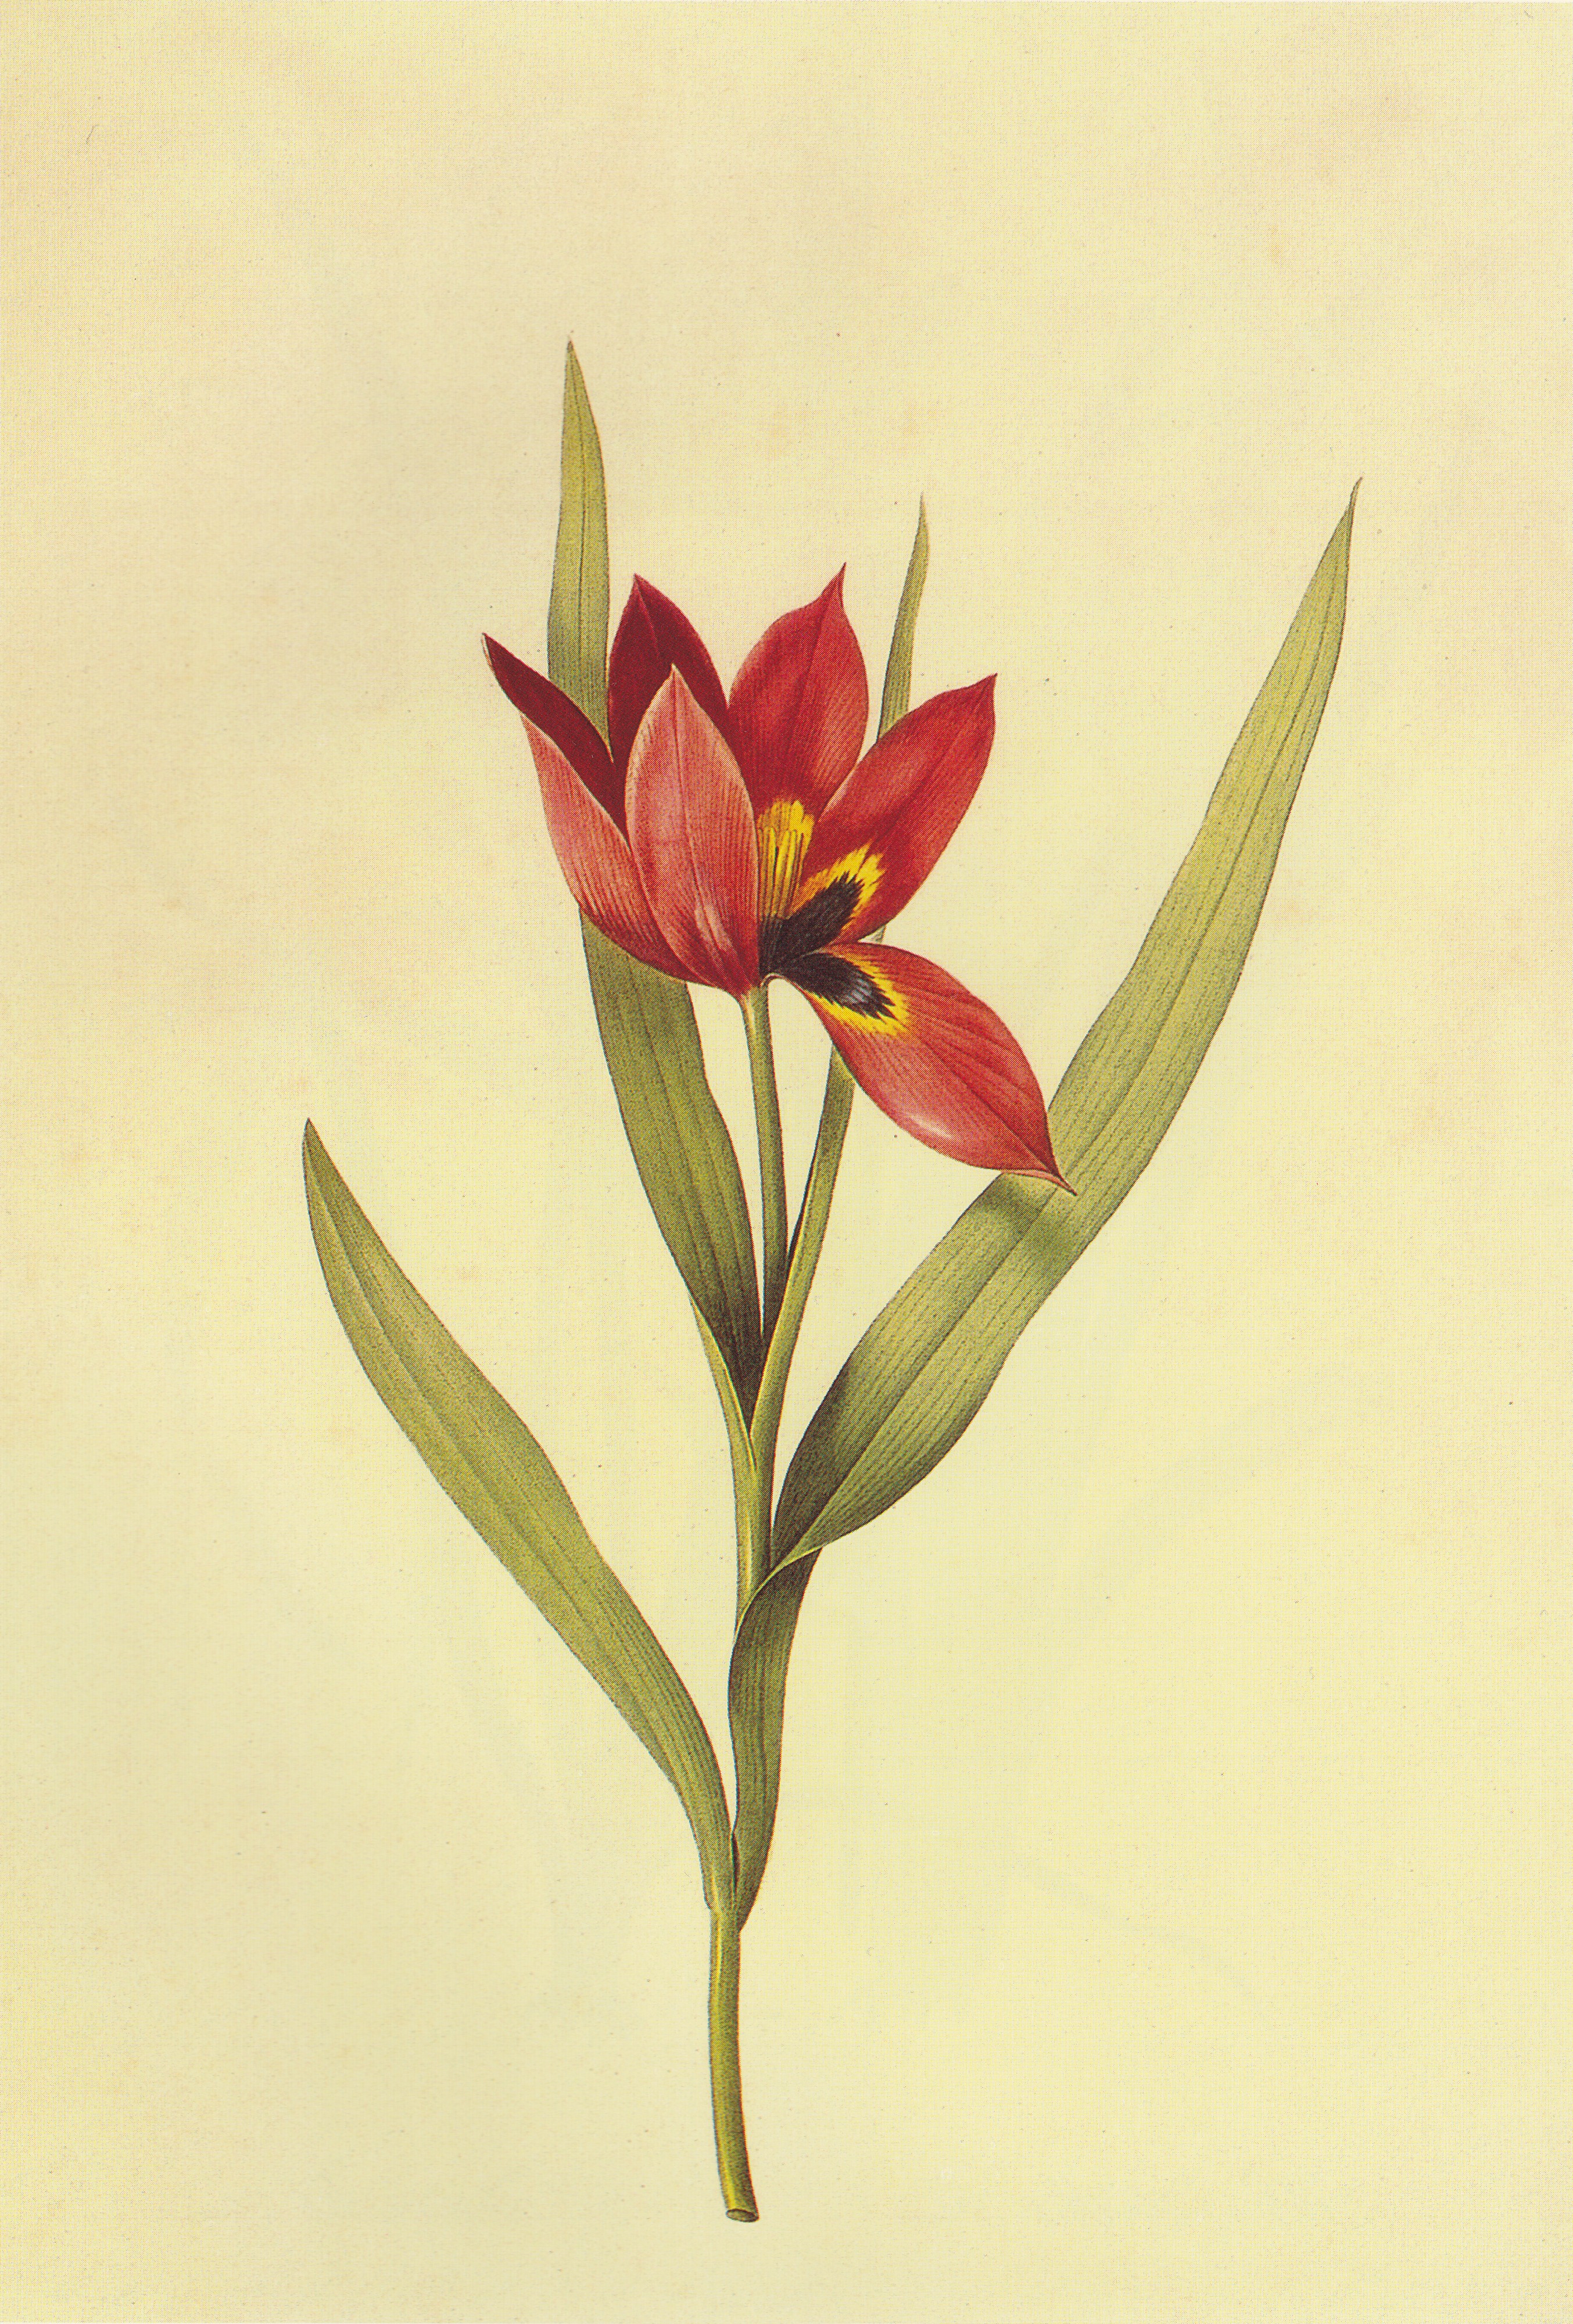 Tulipa agenensis in Les liliacees